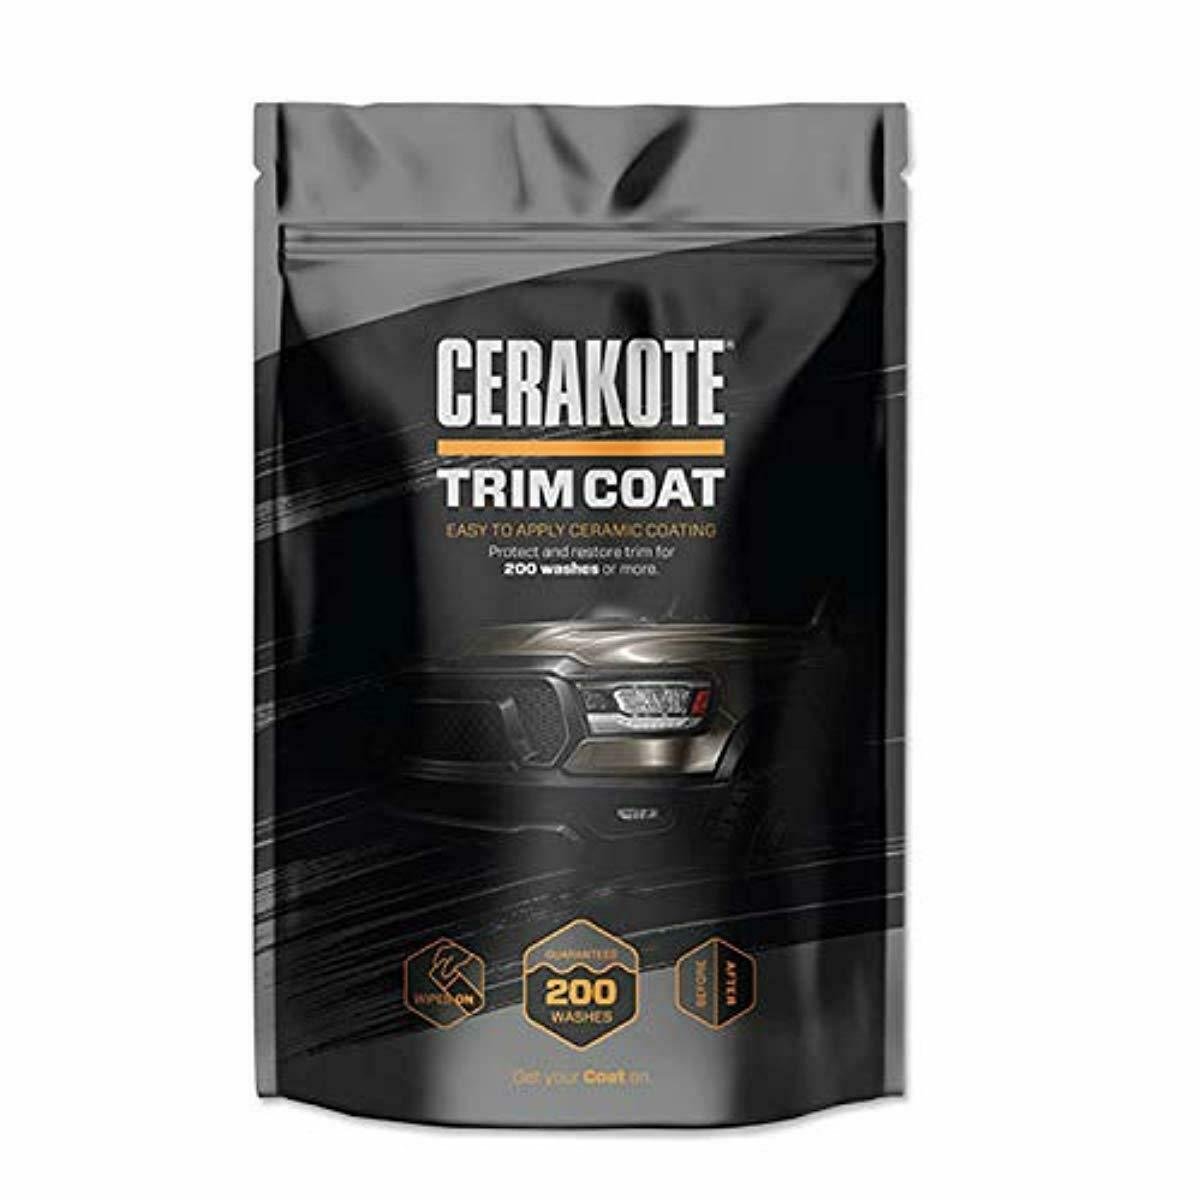 Anyone try Cerakote Ceramic Trim Coat?